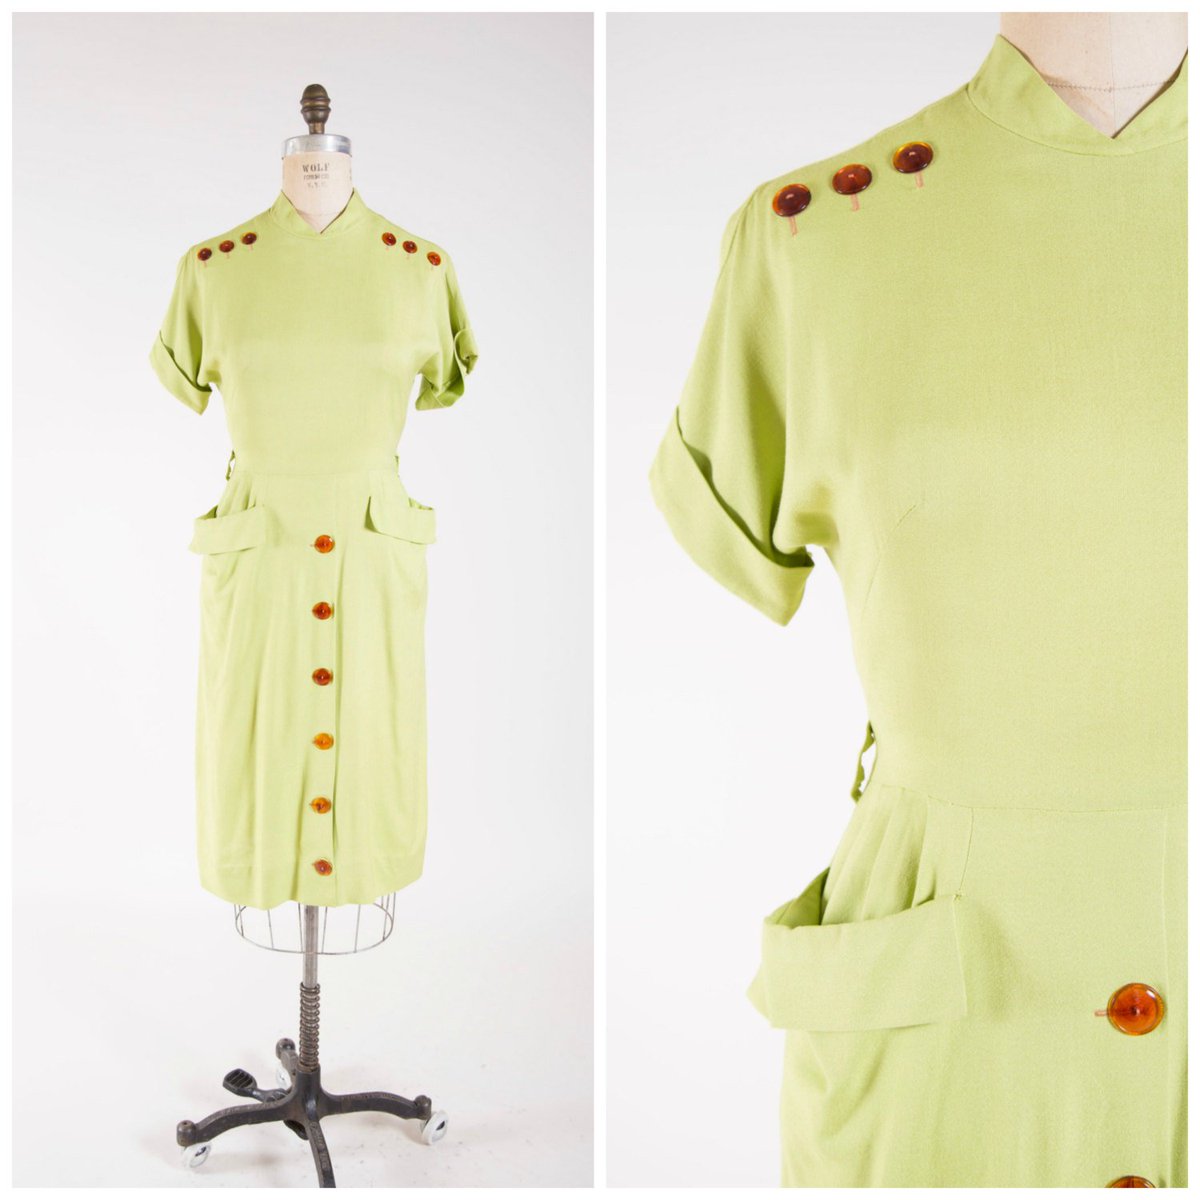 50s Vintage Dress Lime Green Rayon Linen Vintage 1950s Sheath Dress… etsy.com/listing/258929… #Etsy #50sCocktailDress